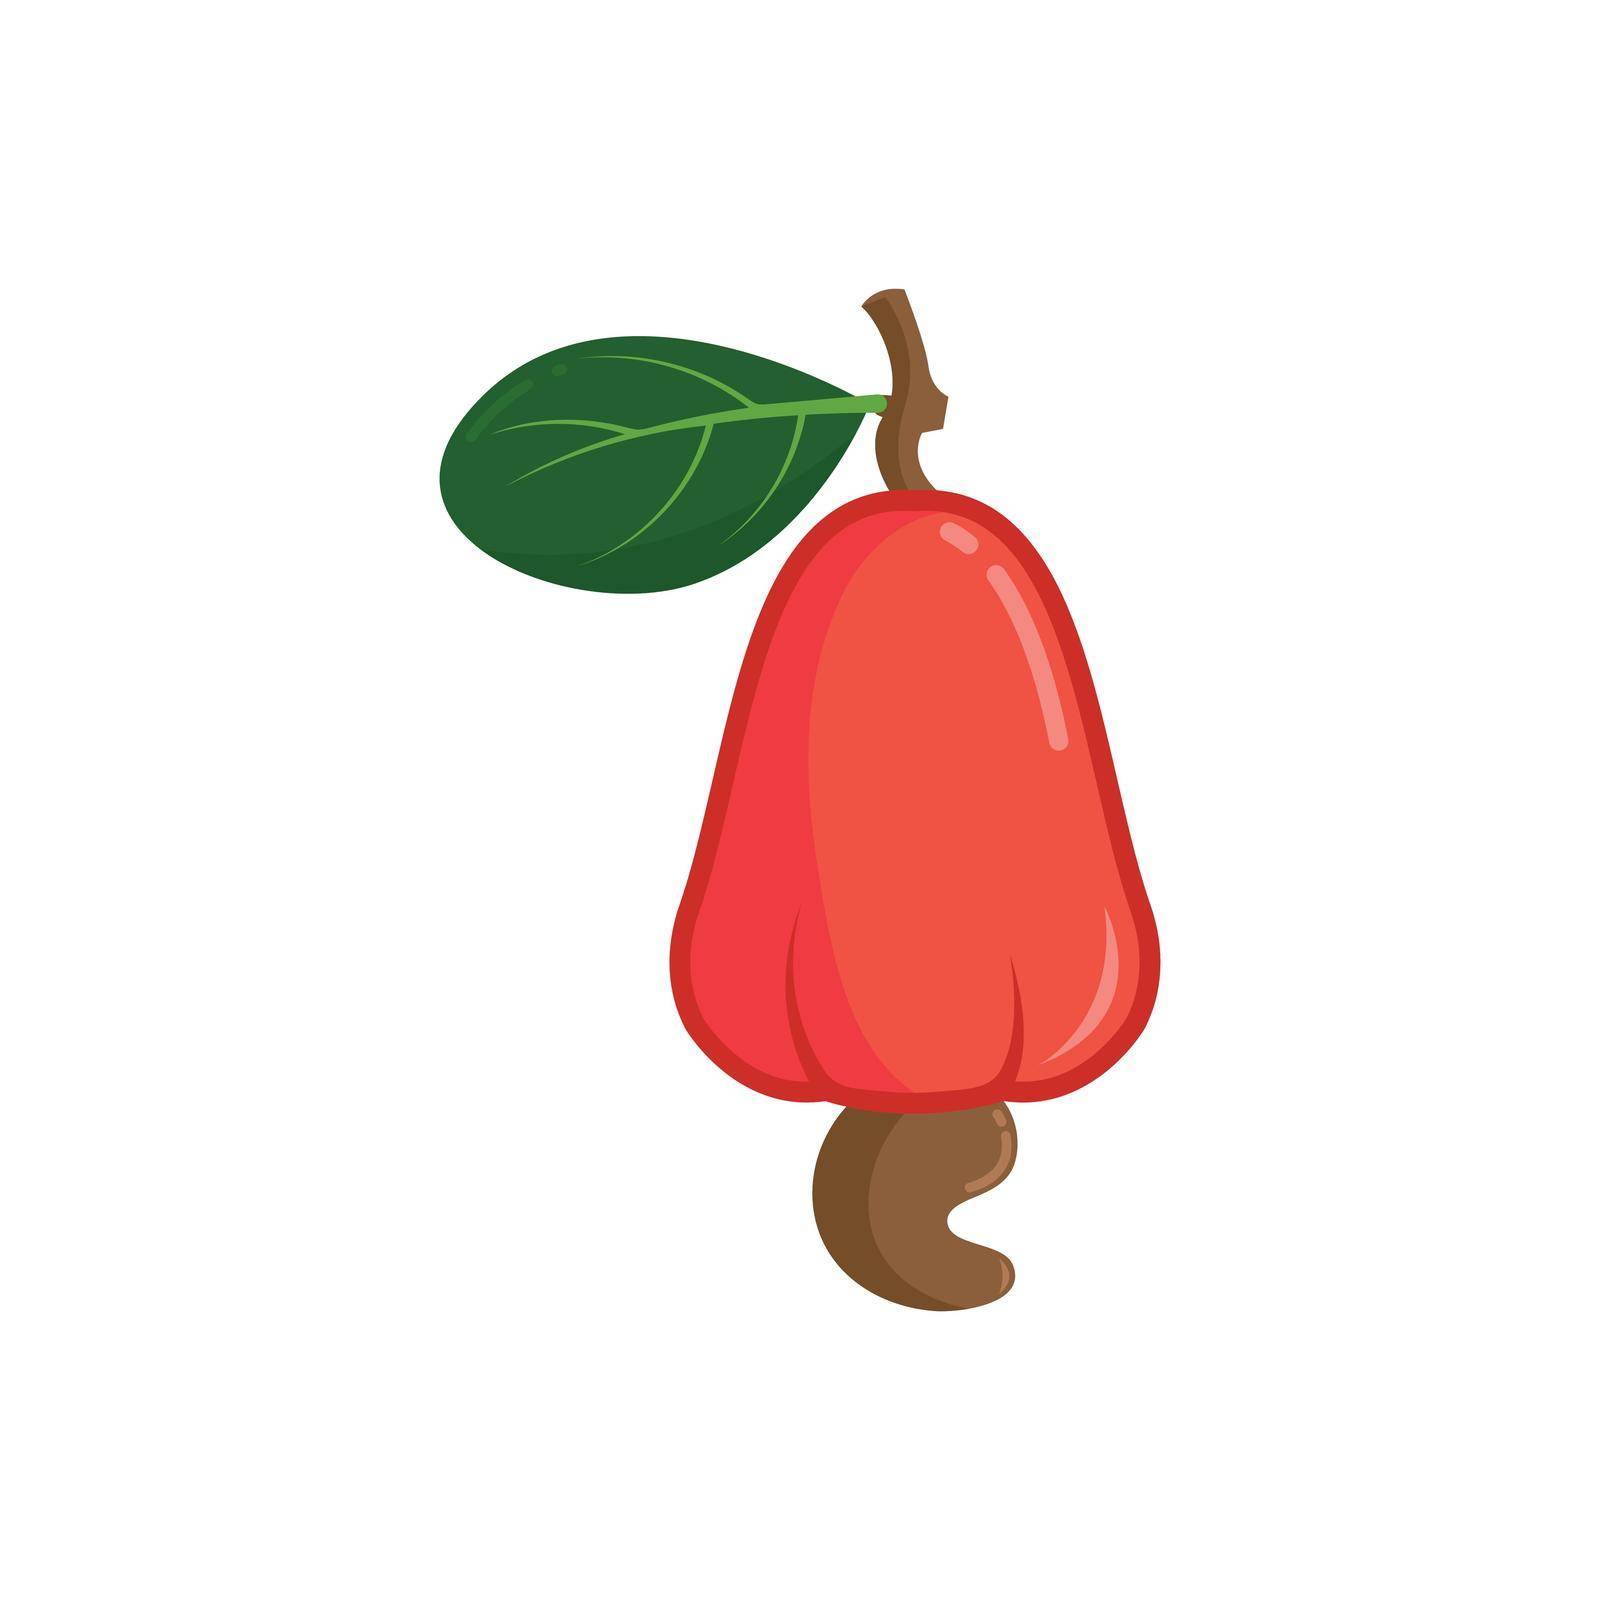 cashew nut vector illustration concept design template